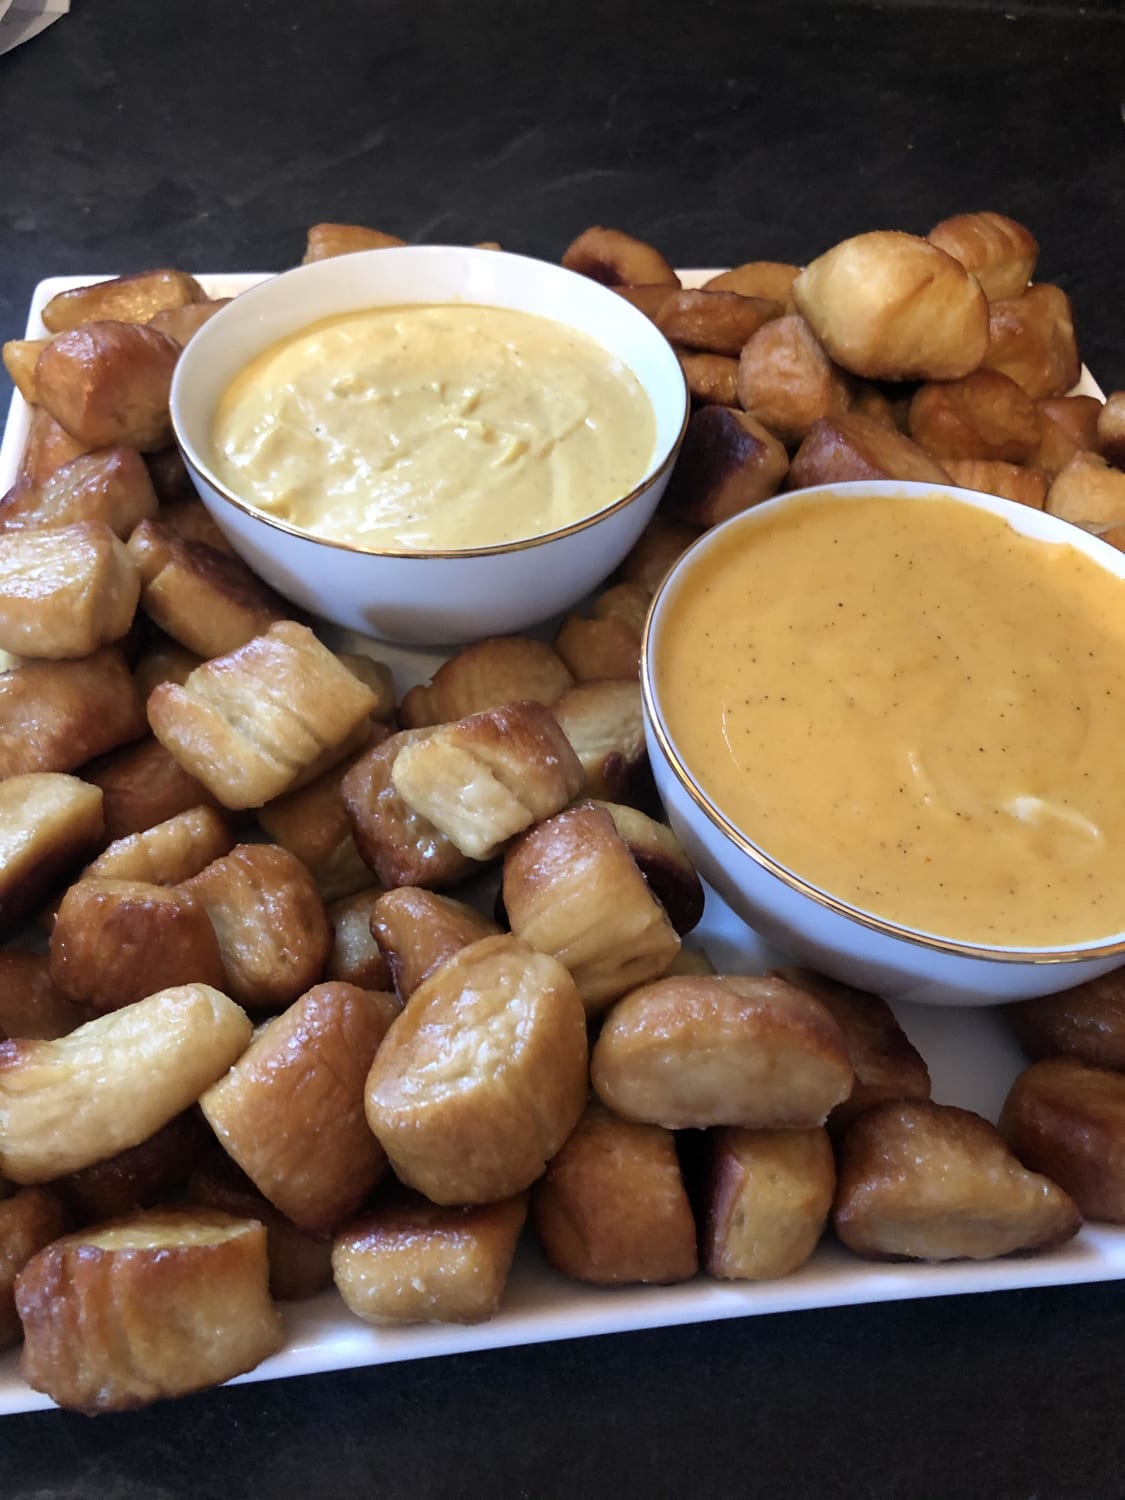 [Homemade] Pretzel Bites with Cheese Sauce and Honey Mustard